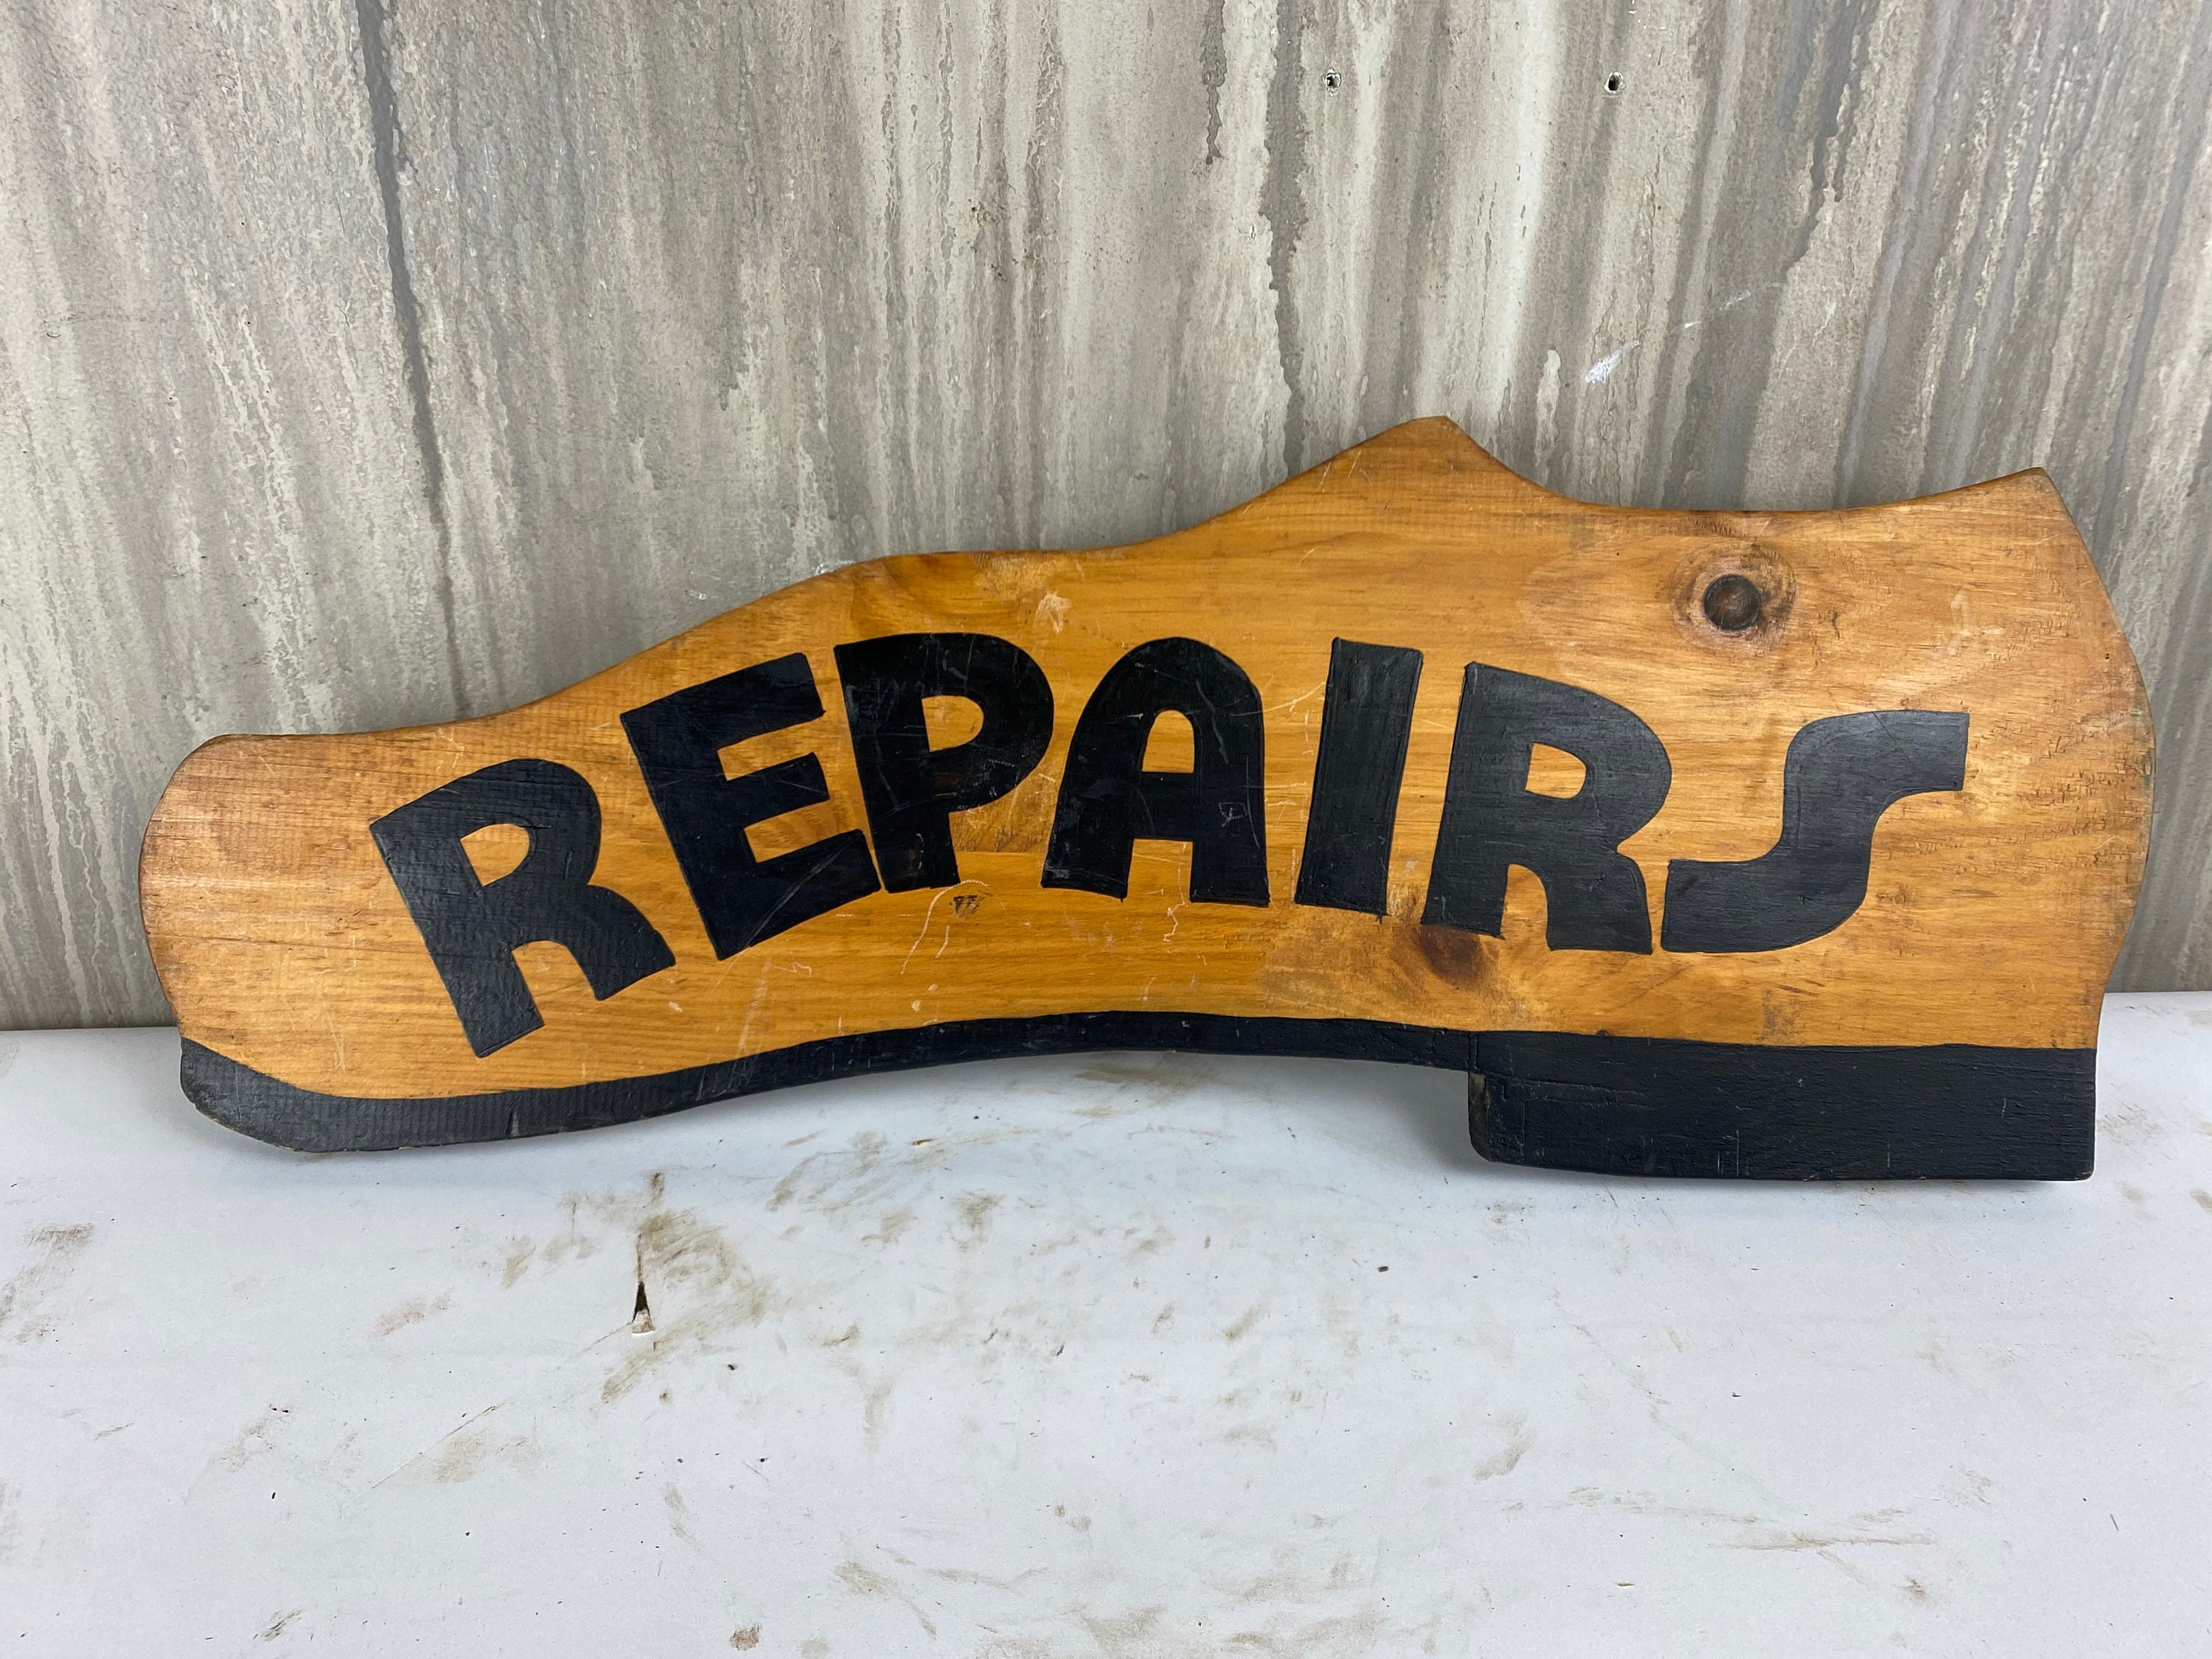 3,247 Shoe Repair Sign Images, Stock Photos, 3D objects, & Vectors